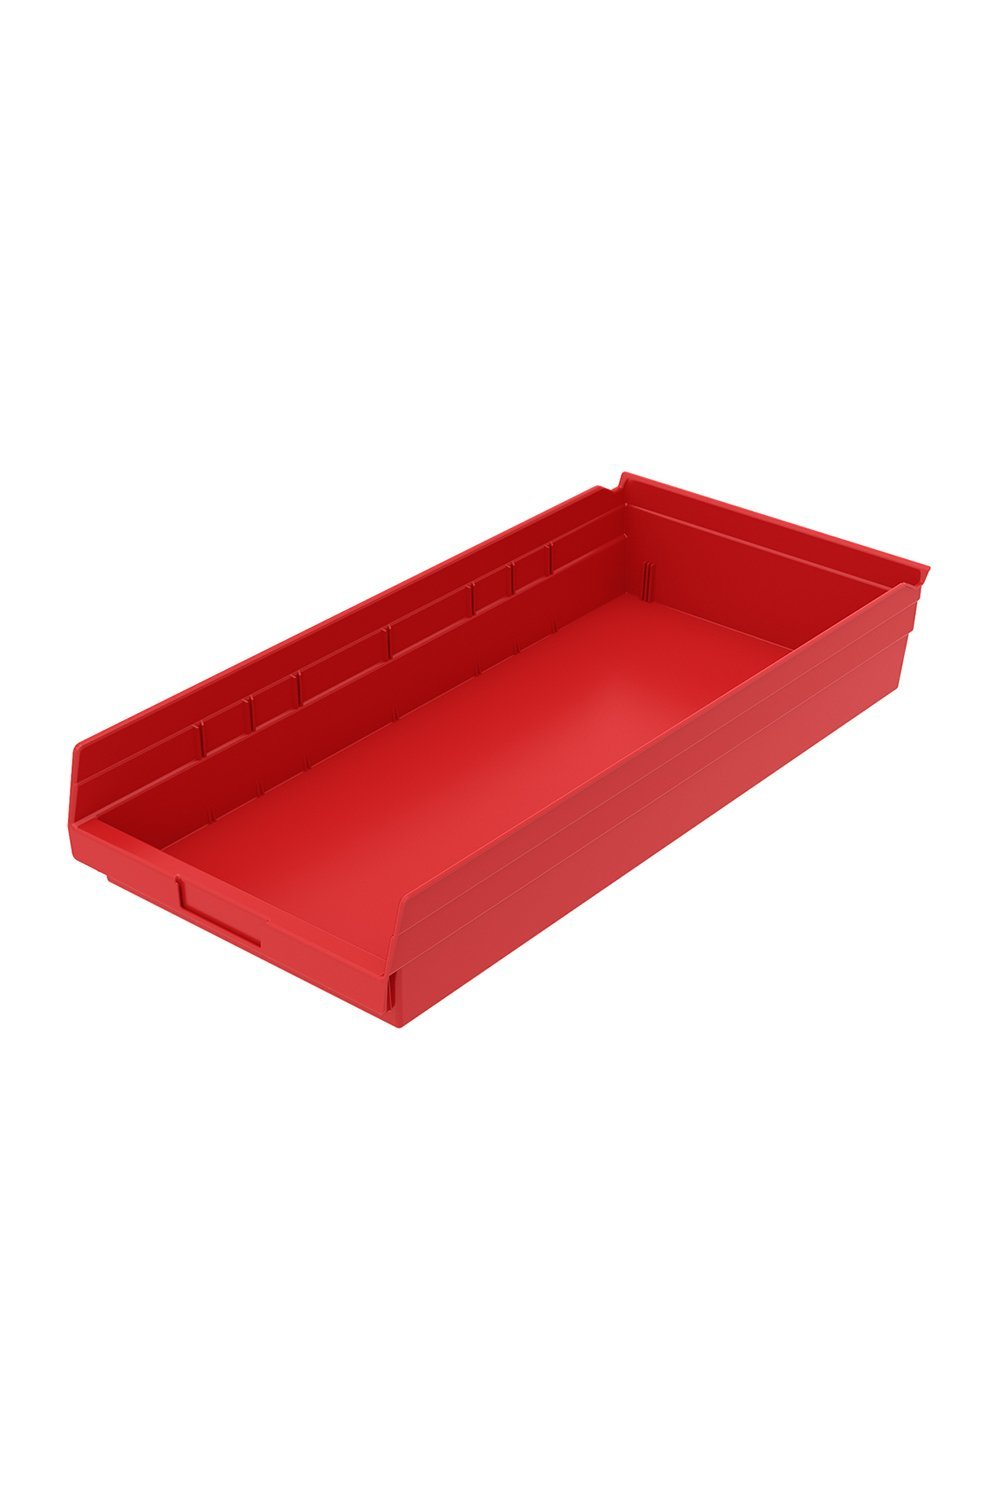 Shelf Bin for 24"D Shelves Bins & Containers Acart 